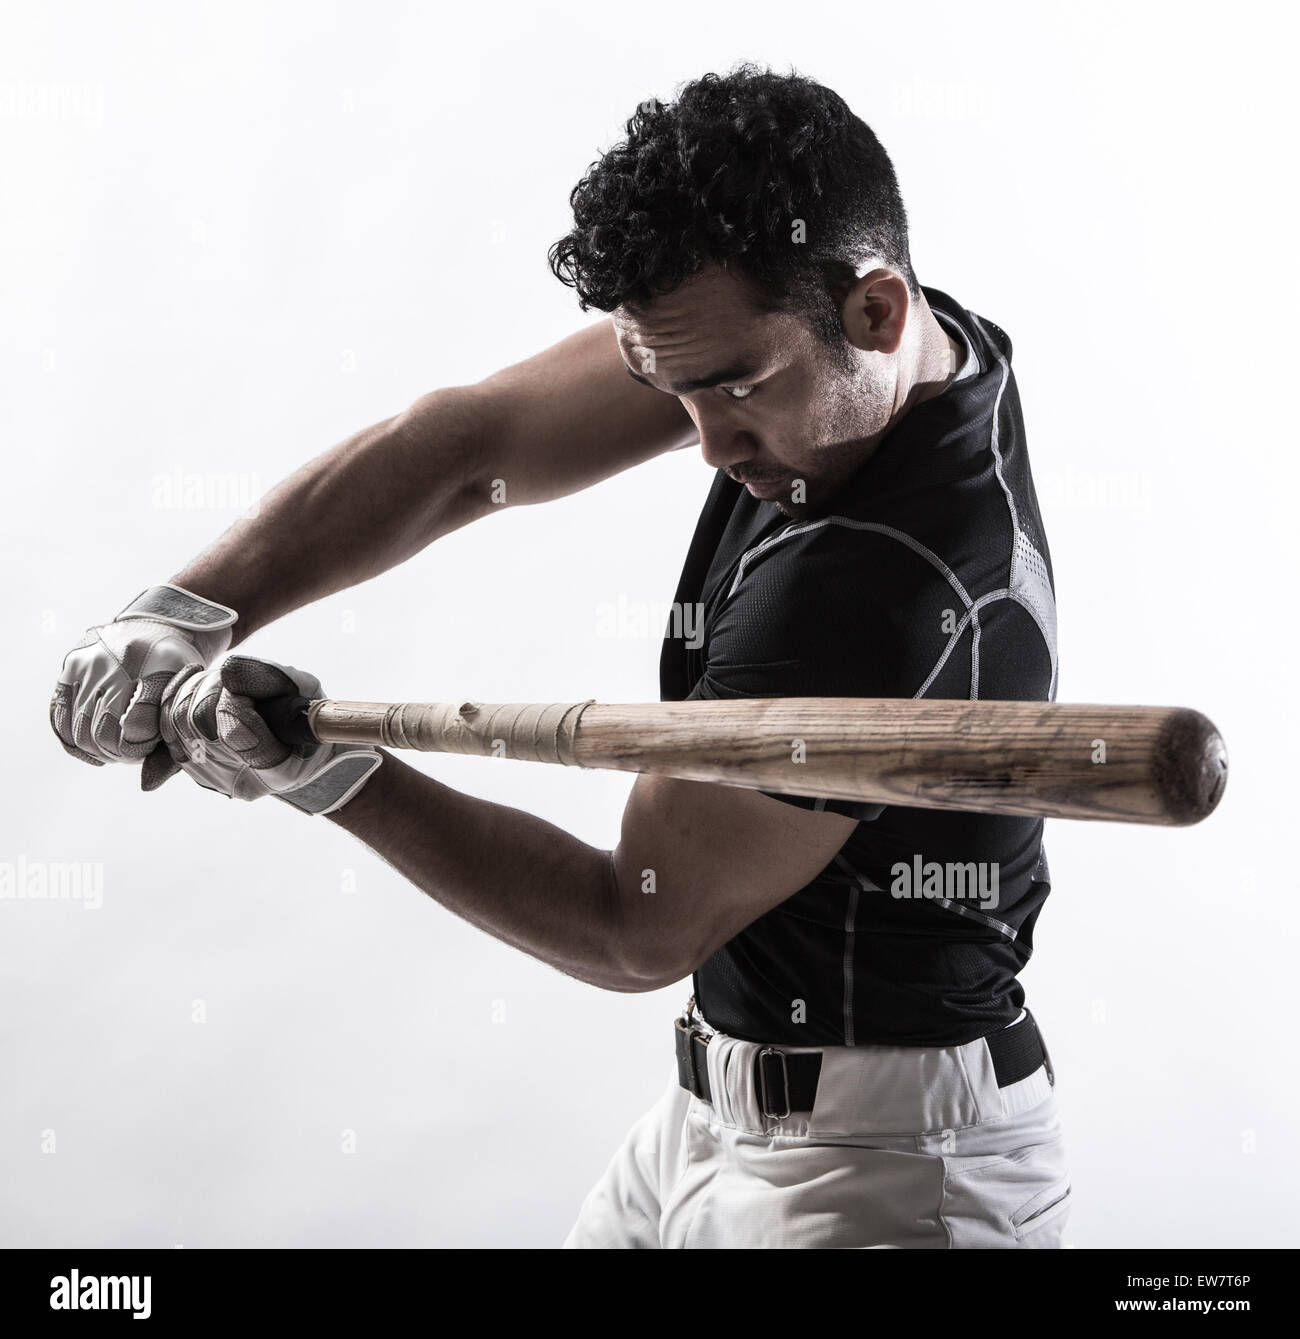 Portrait of a man holding a baseball bat Stock Photo - Alamy